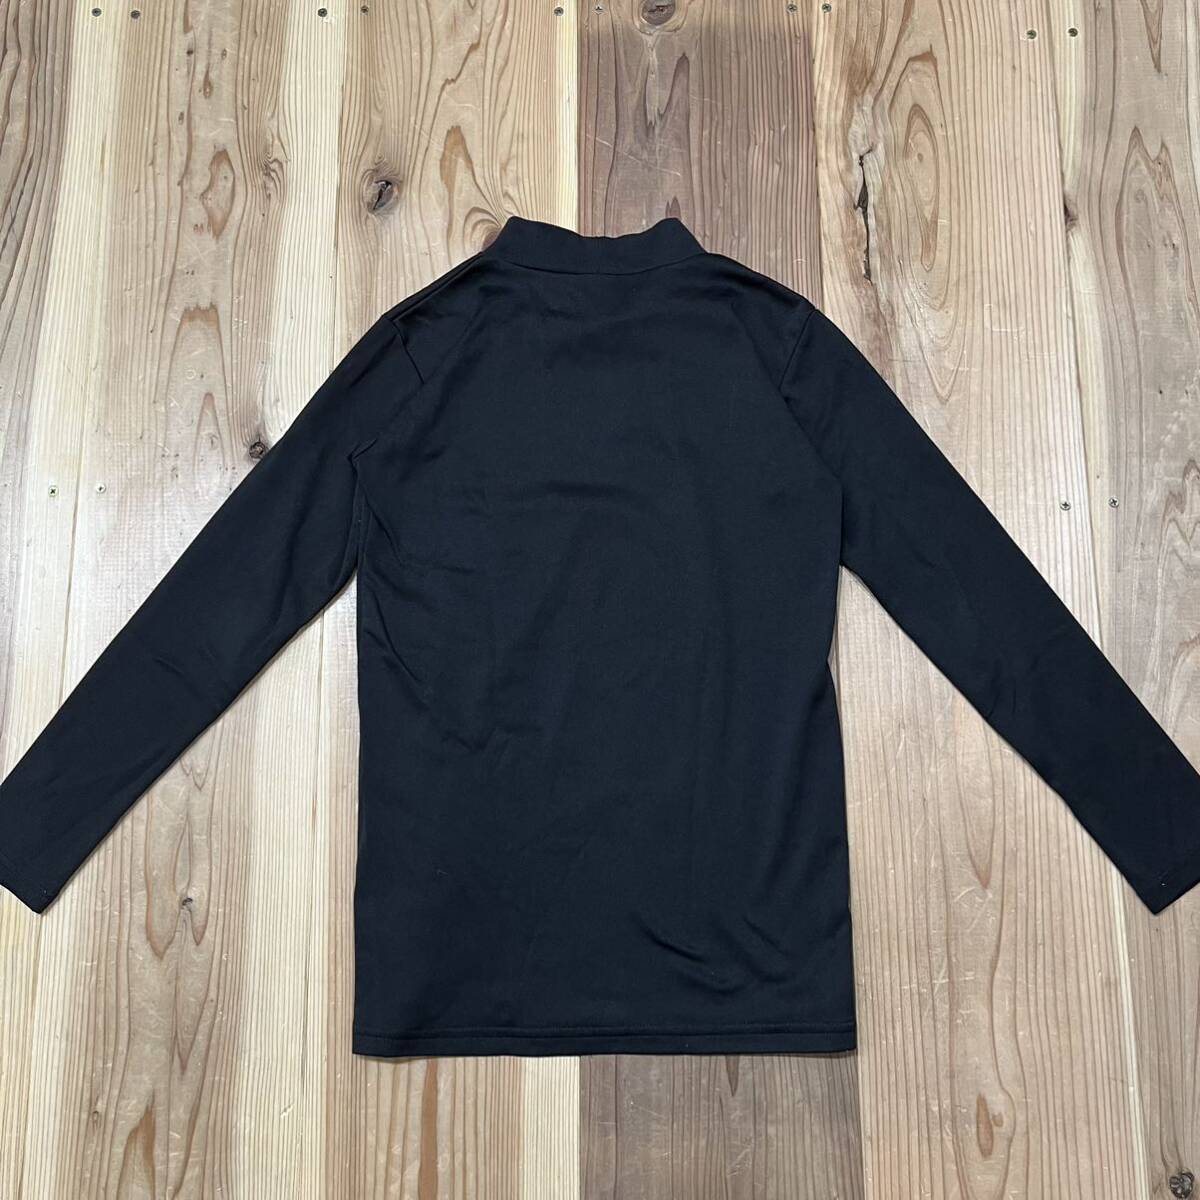 umbro Umbro Descente DESCENTE inner shirt embroidery Logo long sleeve high‐necked stretch black size 160 sphere mc2749